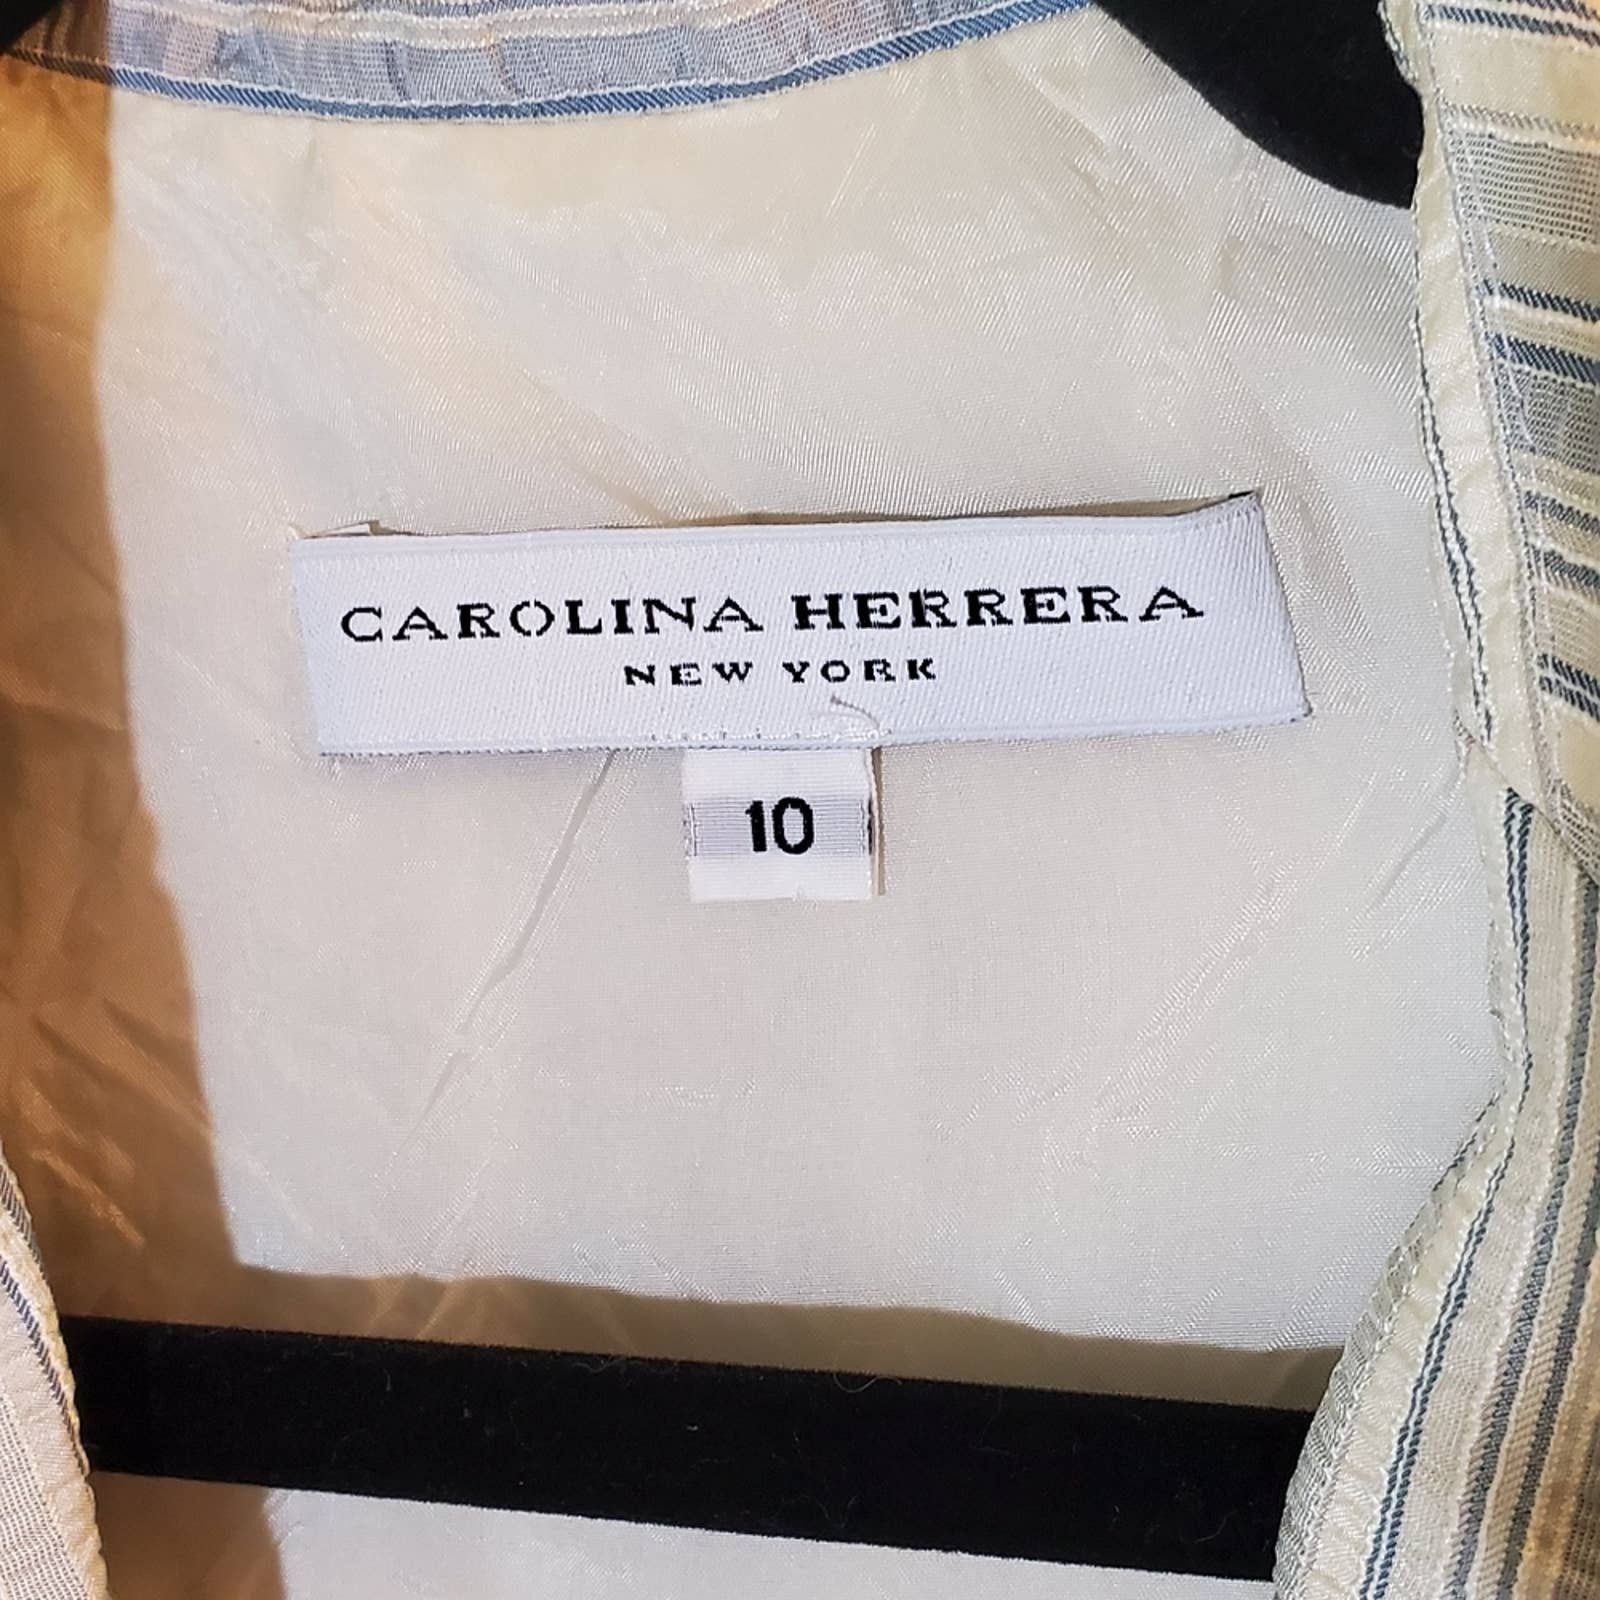 Carolina Herrera CAROLINA HERRERA Striped Blazer Perfect for Work Casual Chic Size L / US 10 / IT 46 - 11 Preview